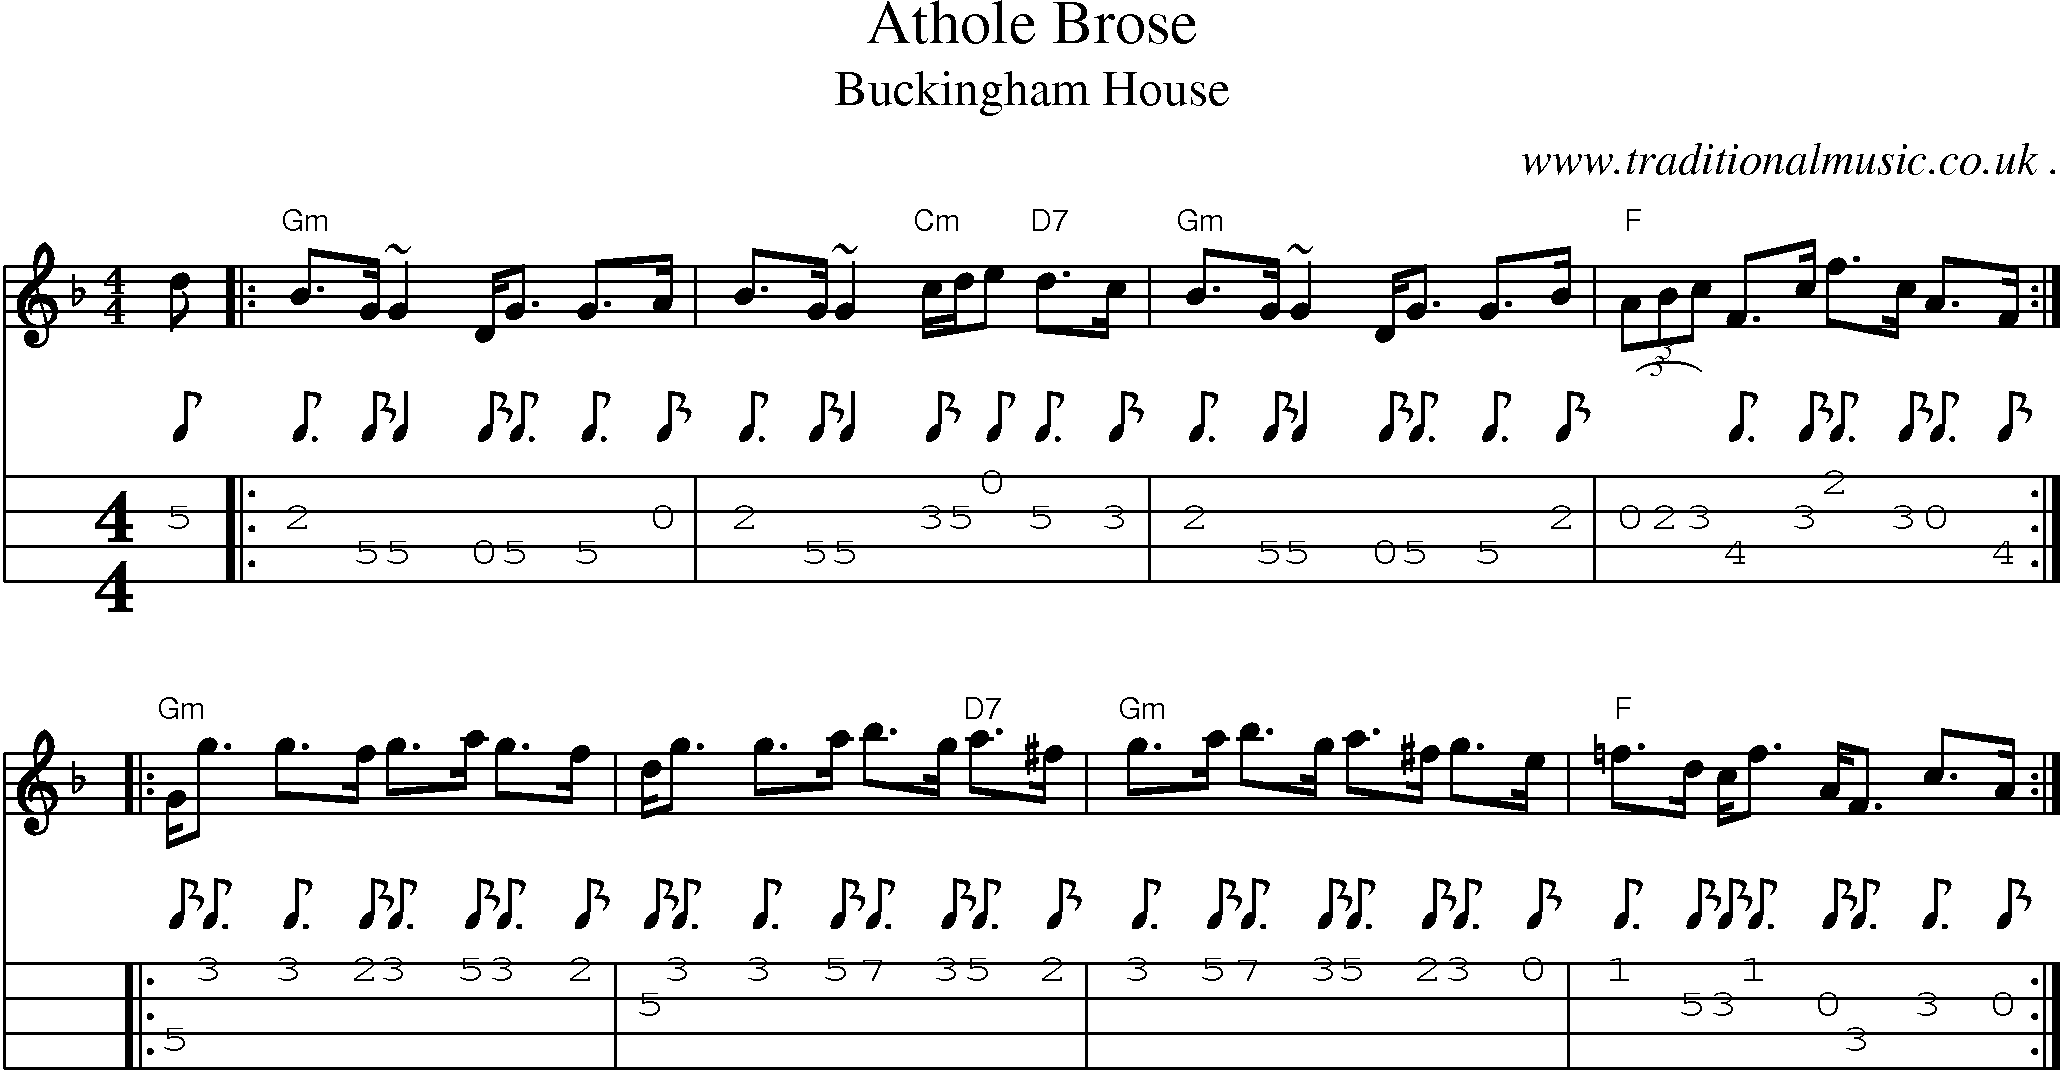 Sheet-music  score, Chords and Mandolin Tabs for Athole Brose